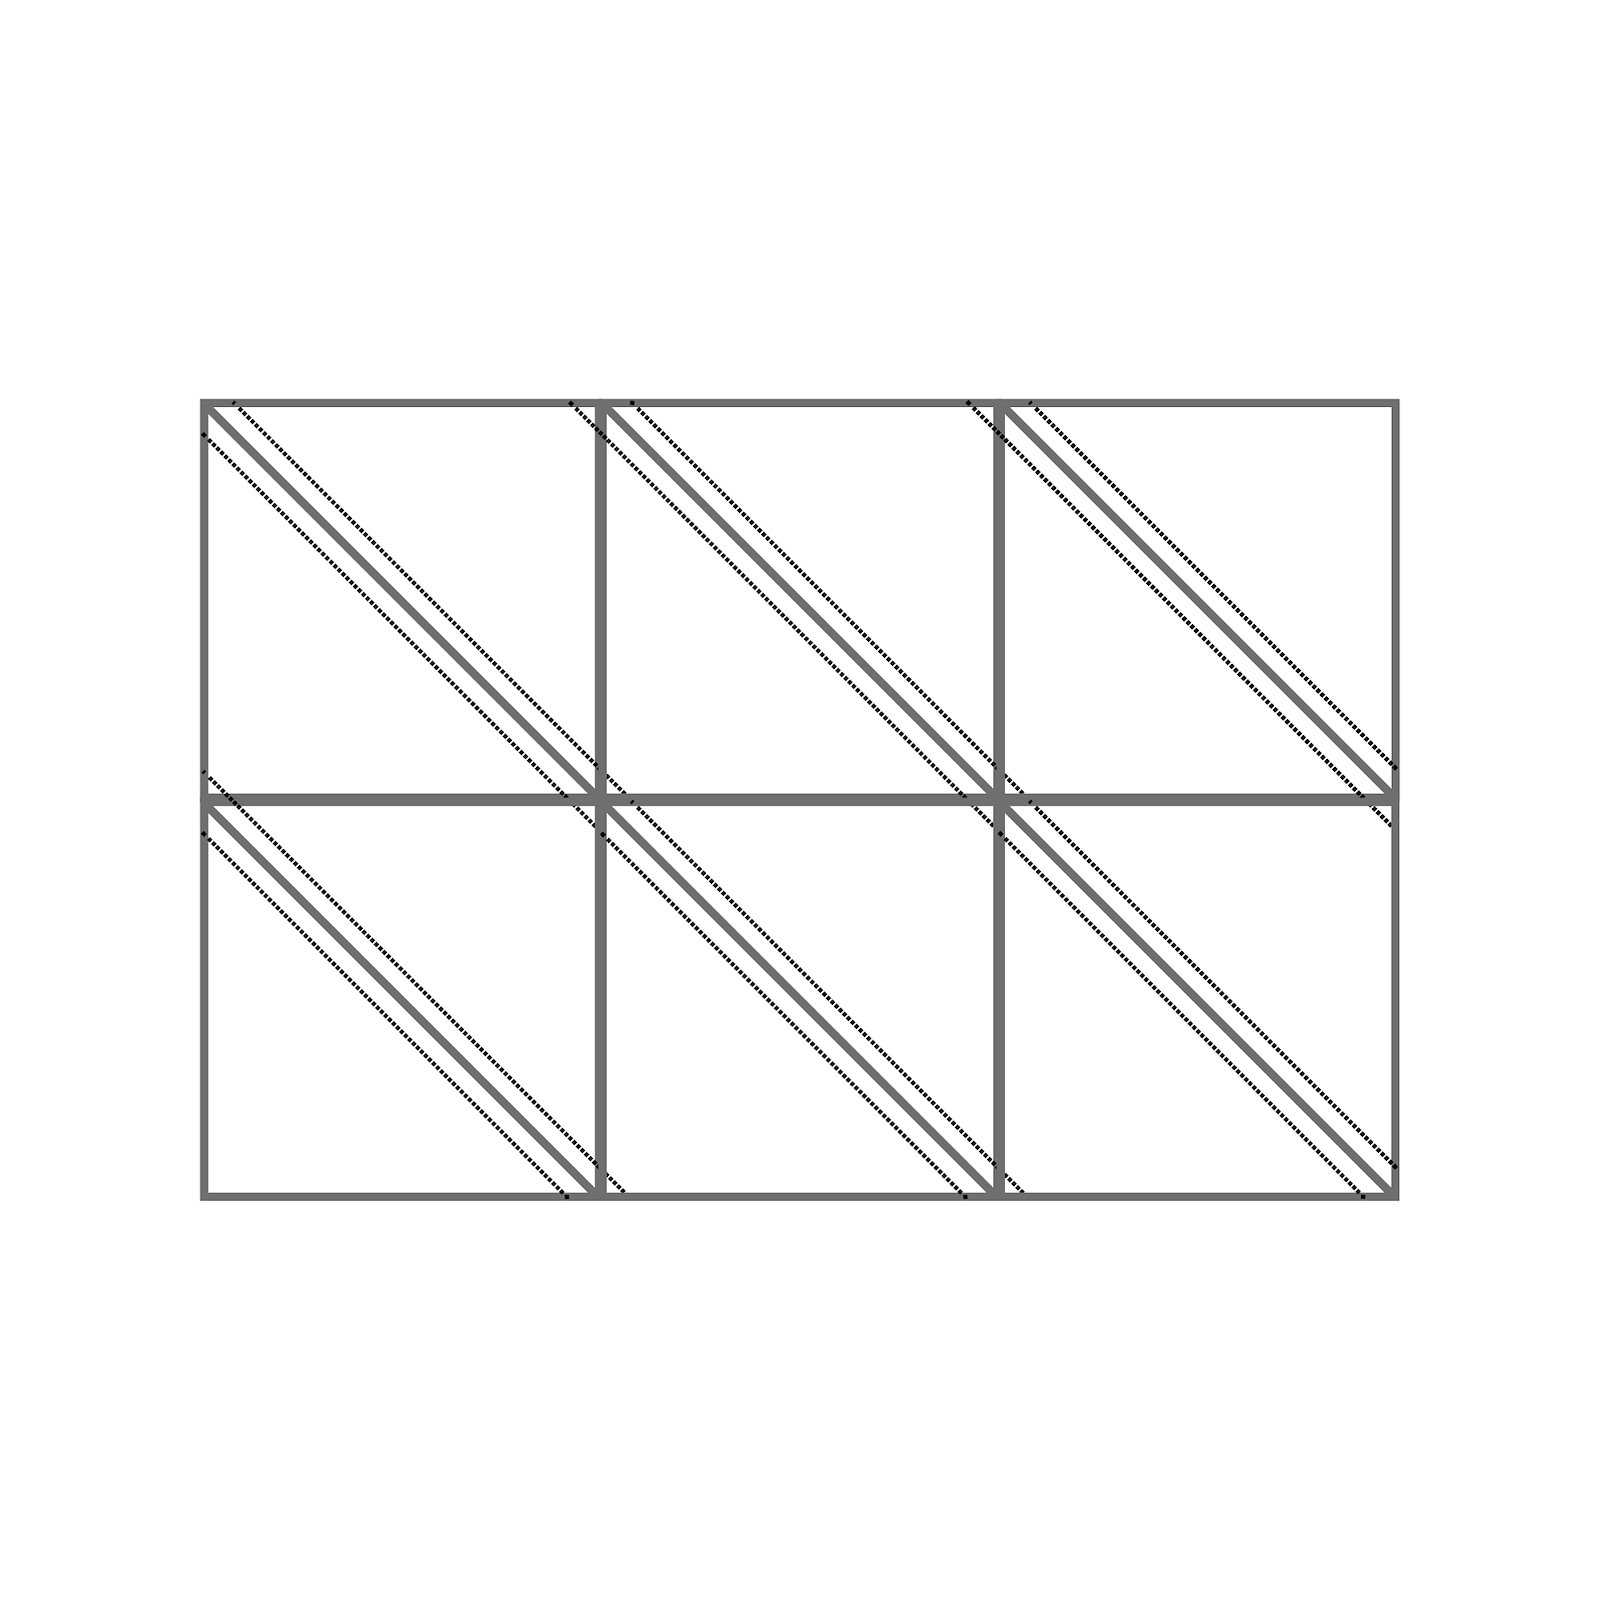 Patchwork quilt block - Windmill Diy9014-step3.jpg